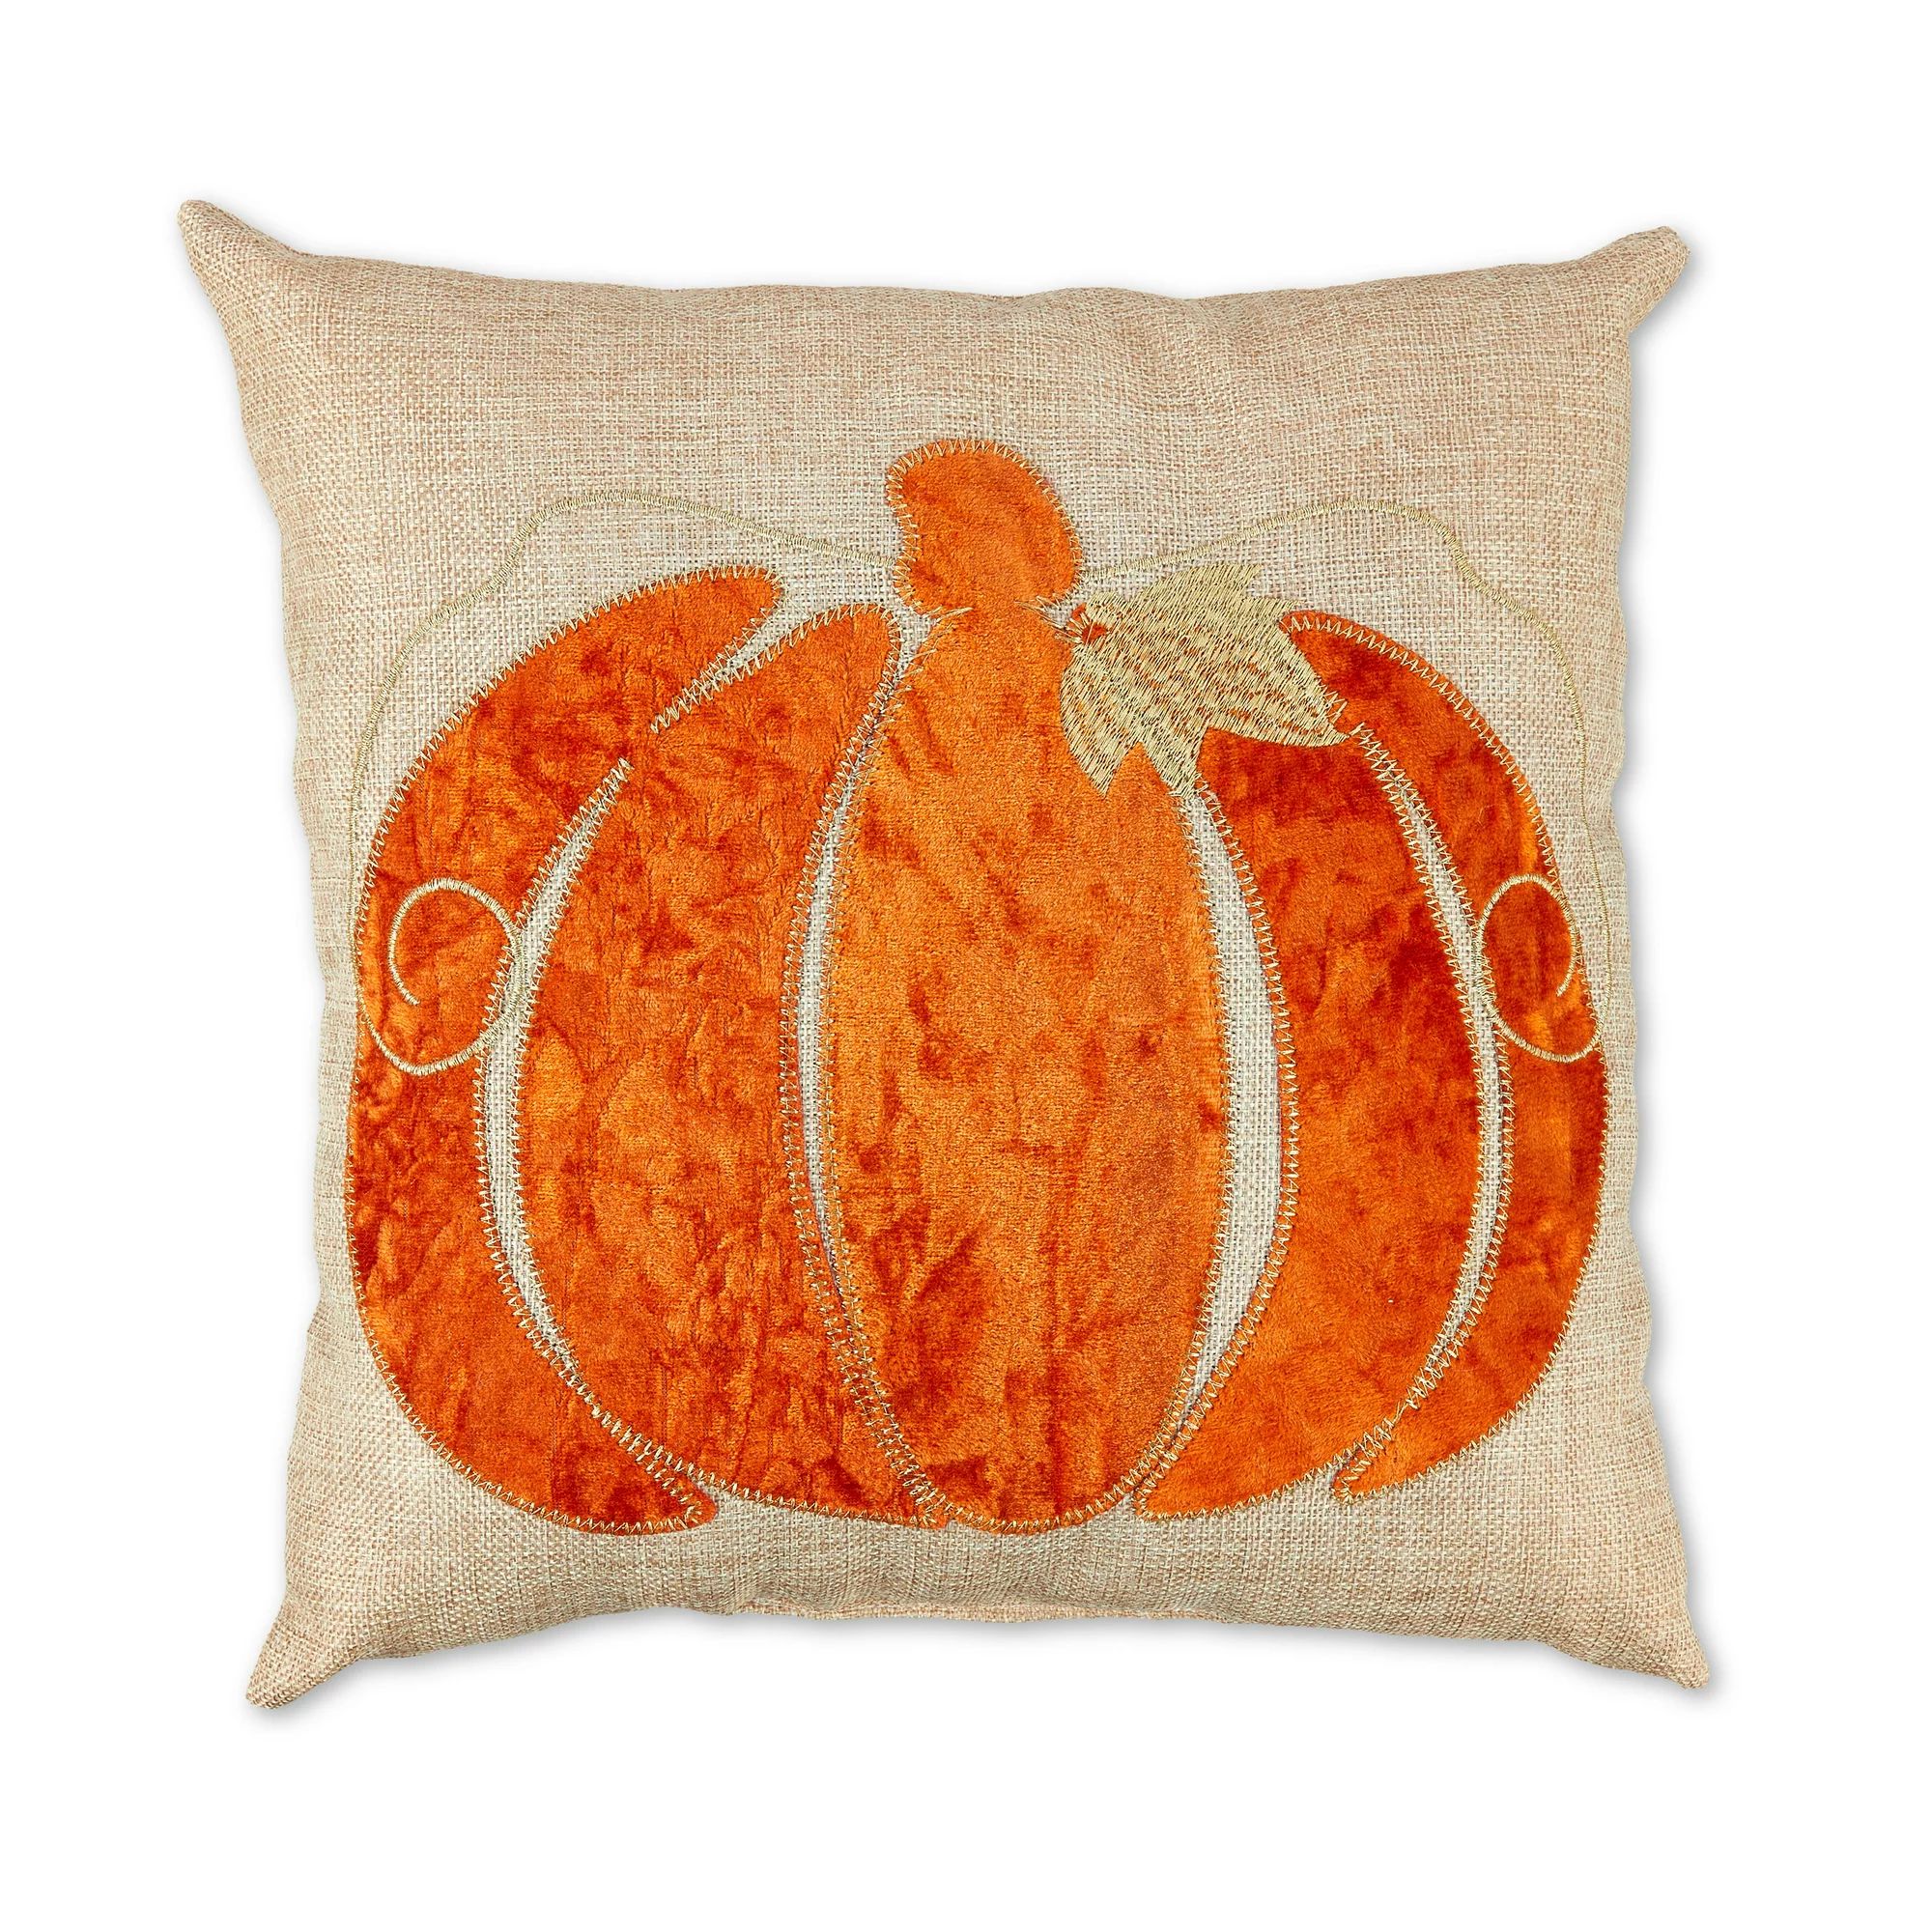 Harvest 13 in Orange Pumpkin Decorative Pillow, Way to Celebrate! | Walmart (US)